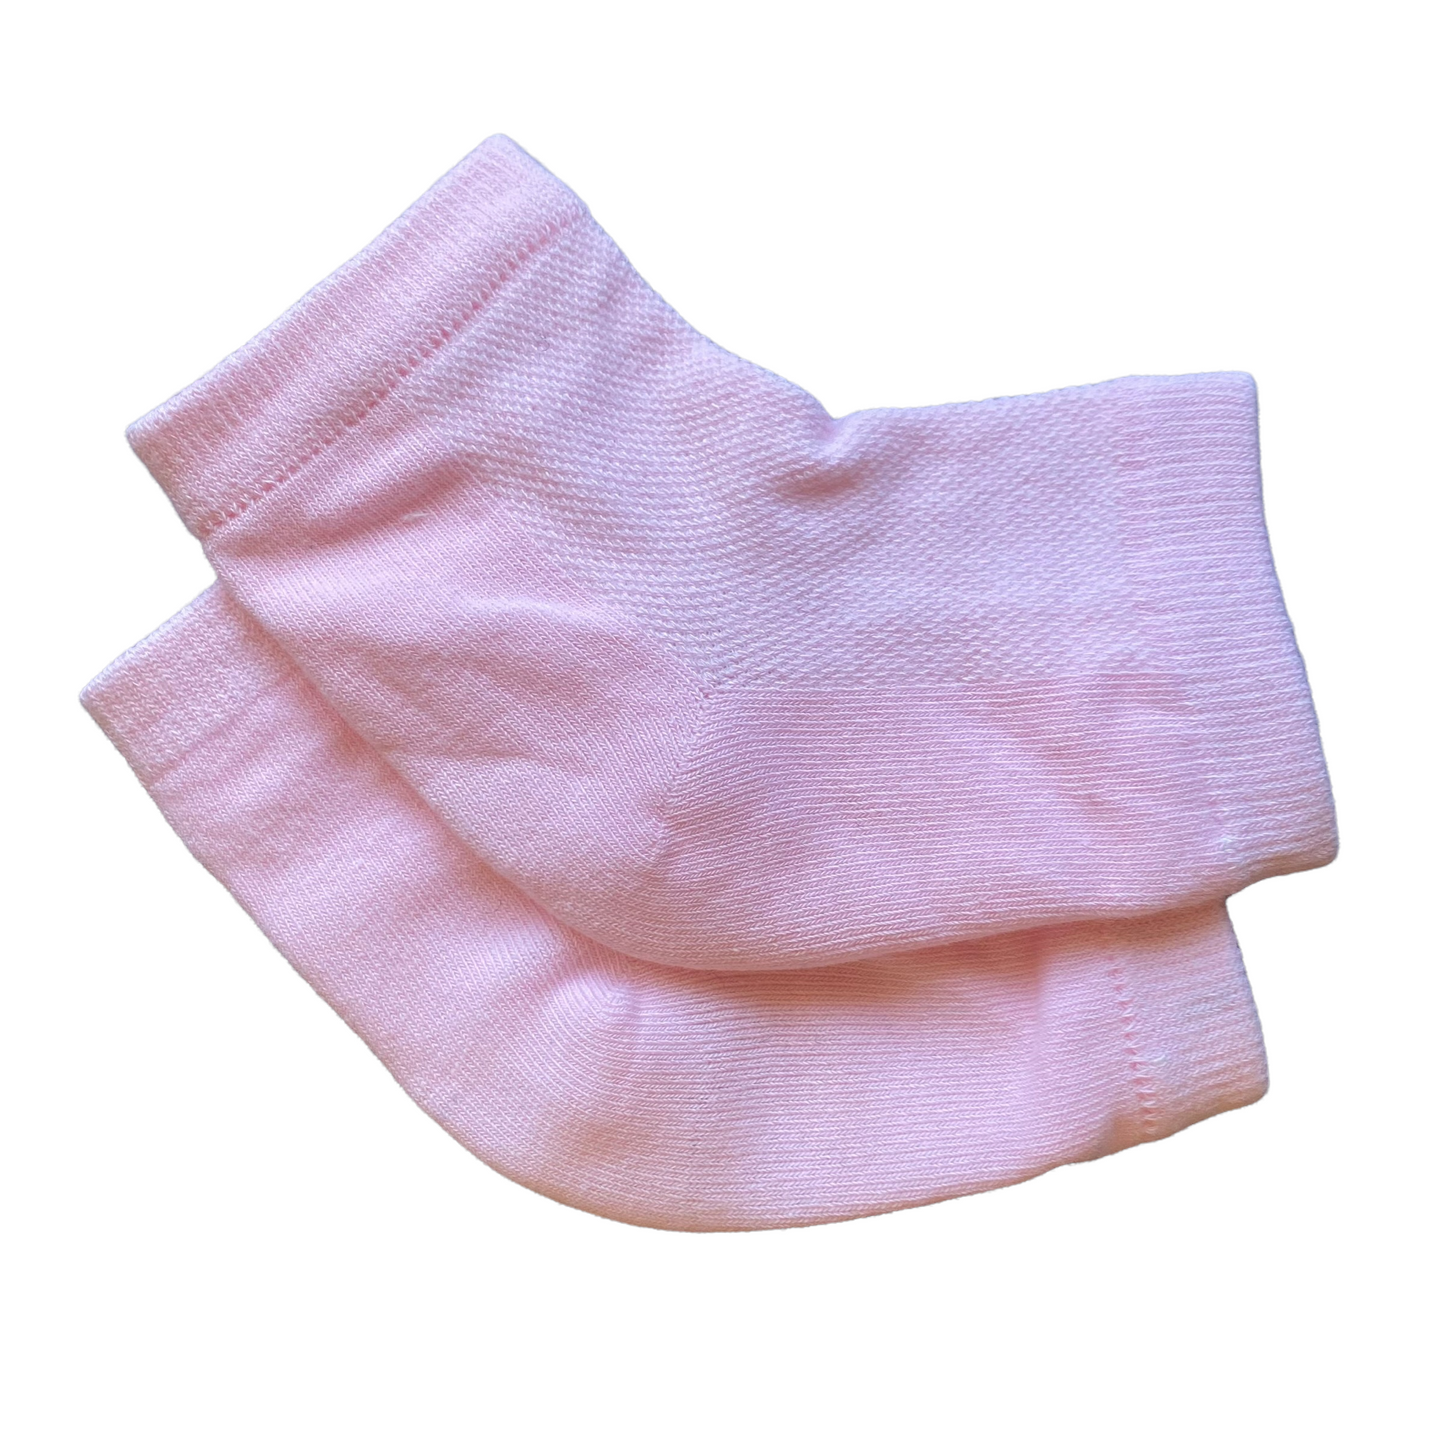 Gel Cotton Socks  SPIRIT SPARKPLUGS Baby Pink  